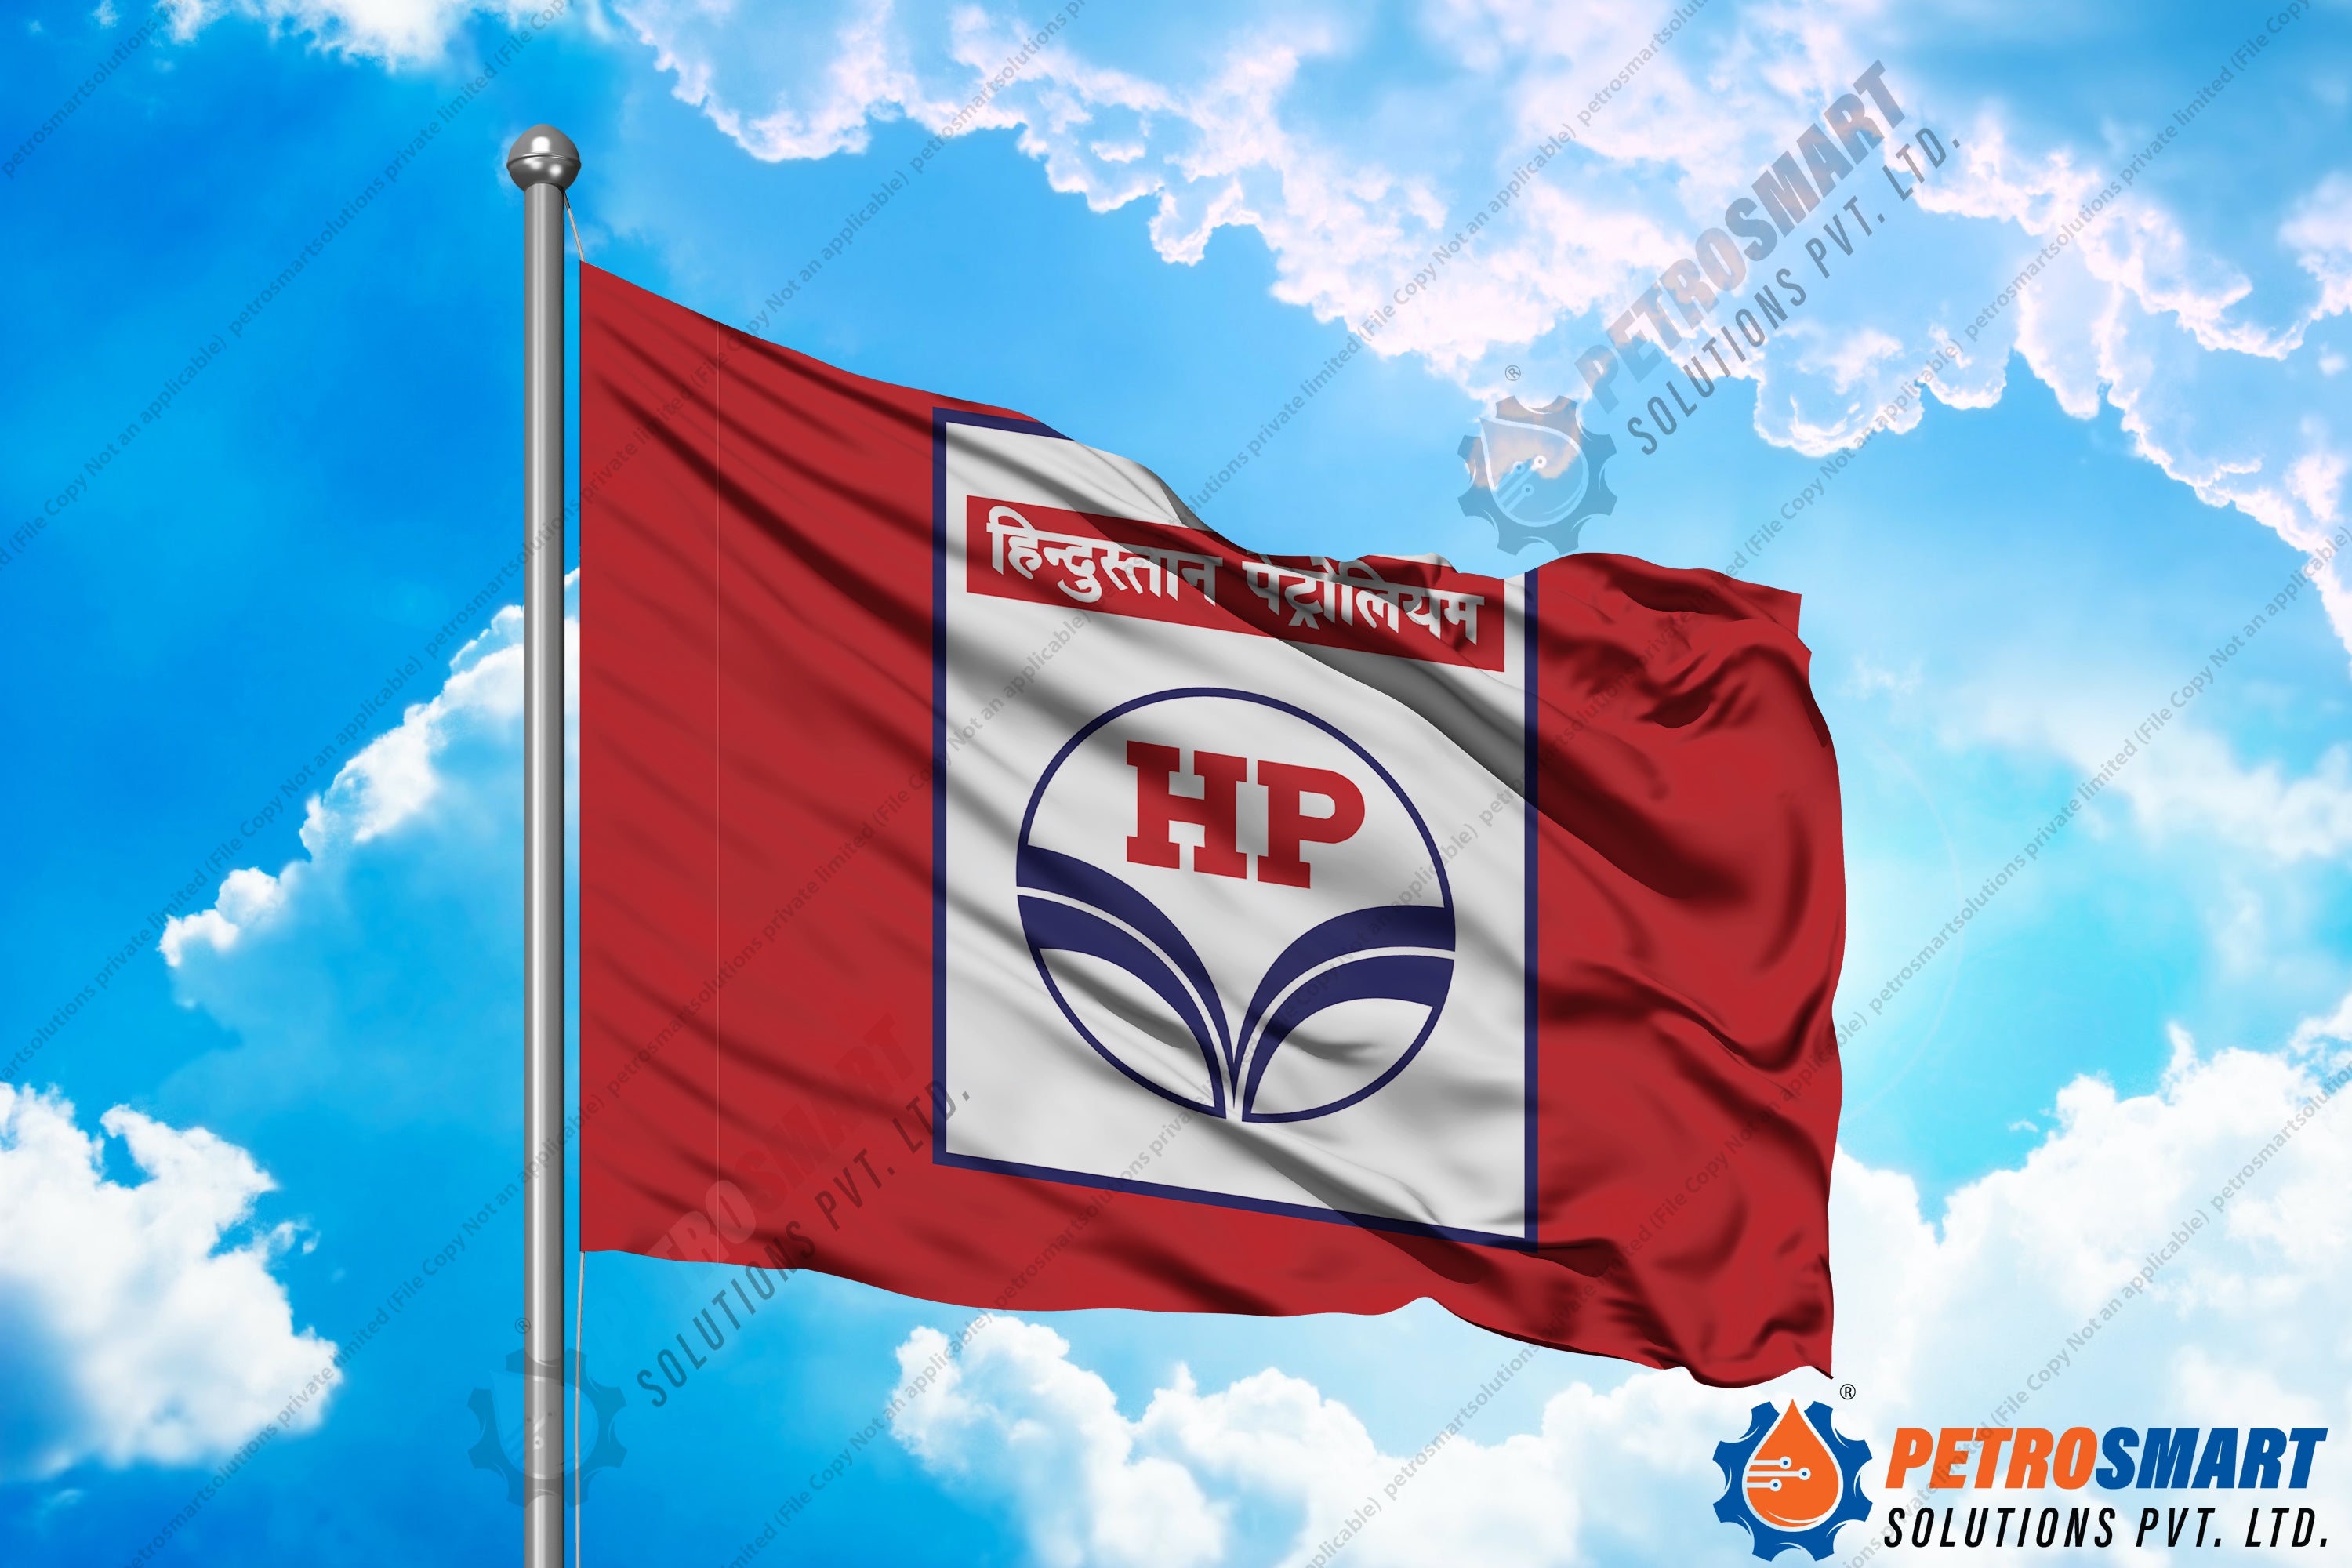 HP Logo Adhesive Sticker Manufacturer, Supplier, Trader in Vadodara,  Gujarat, India